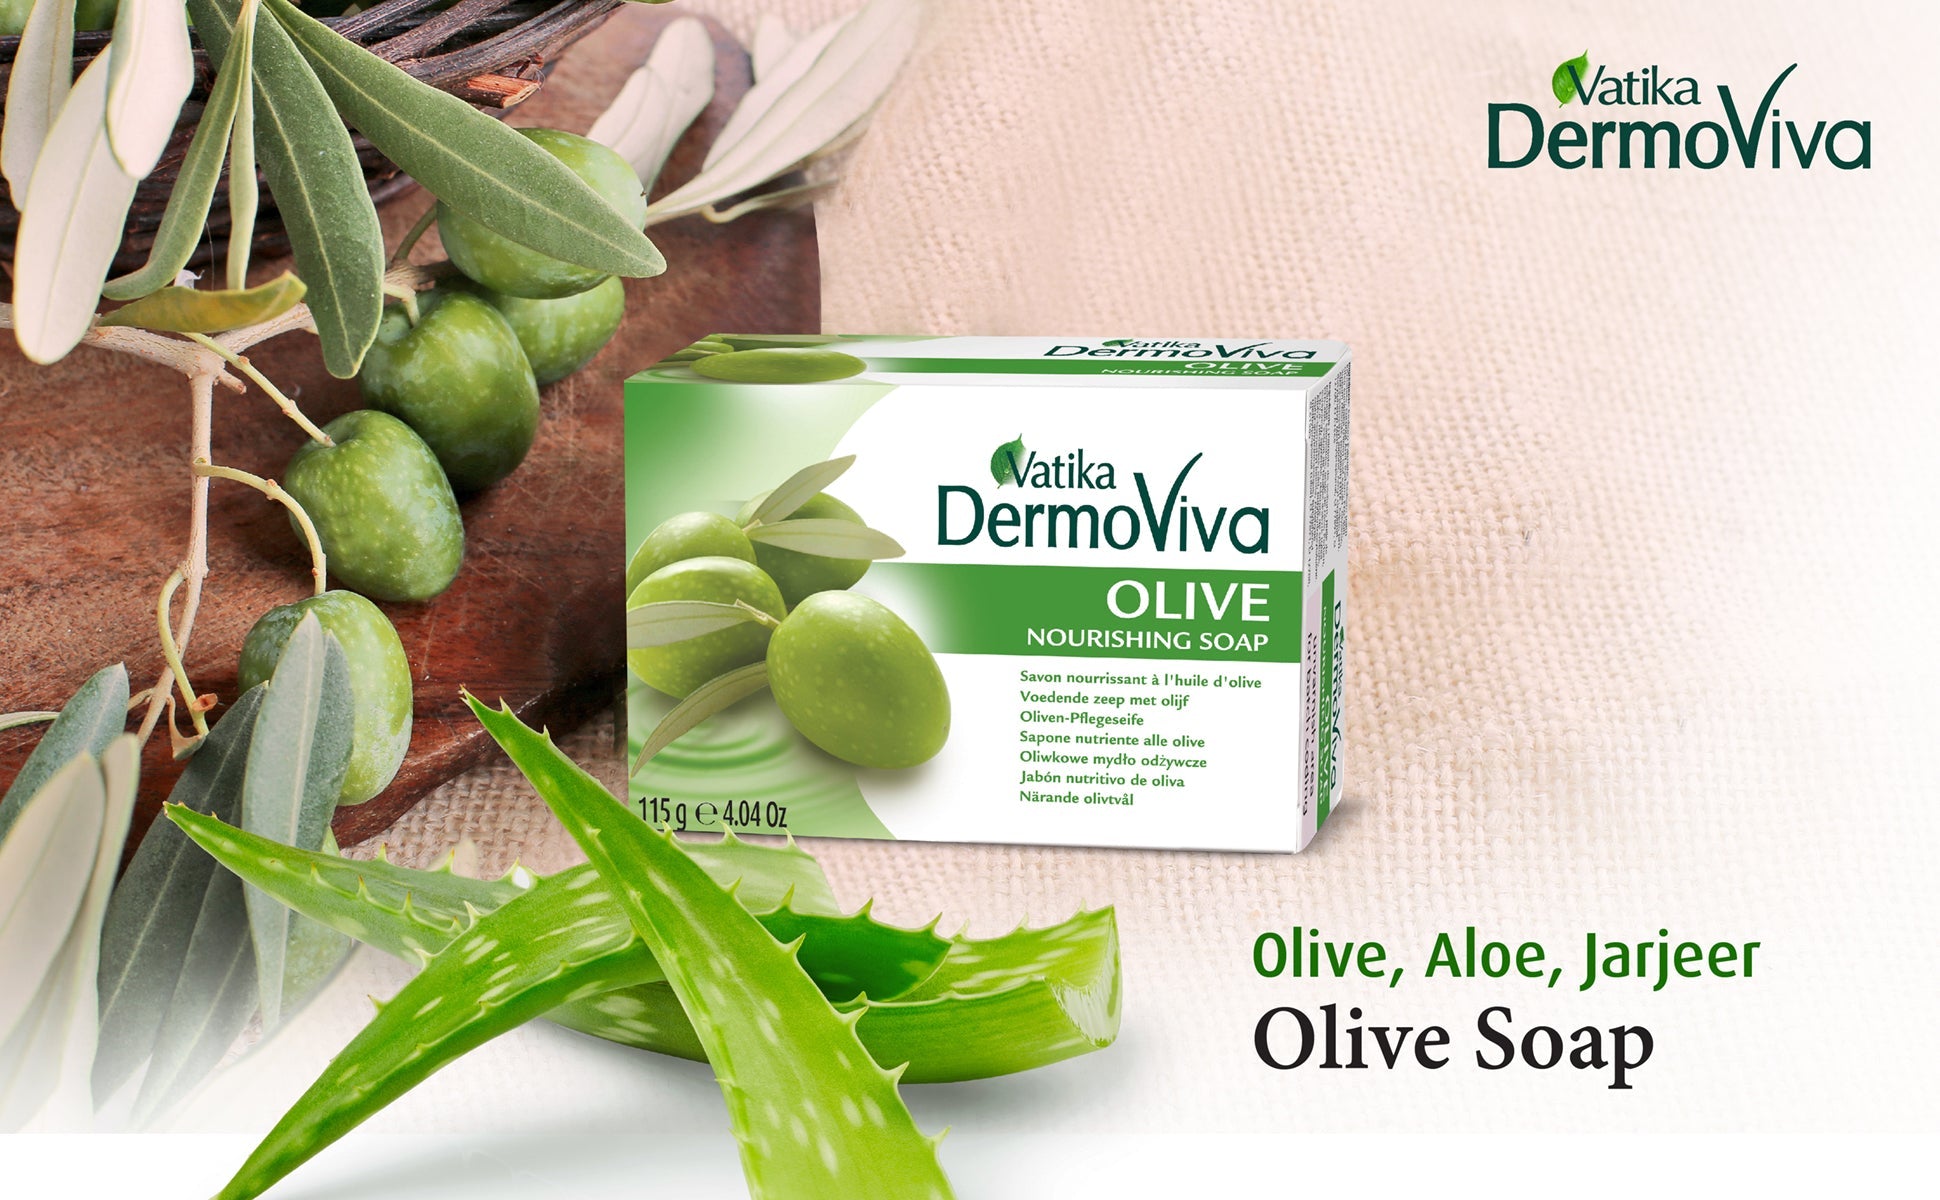 Vatika Dermoviva Olive Soap